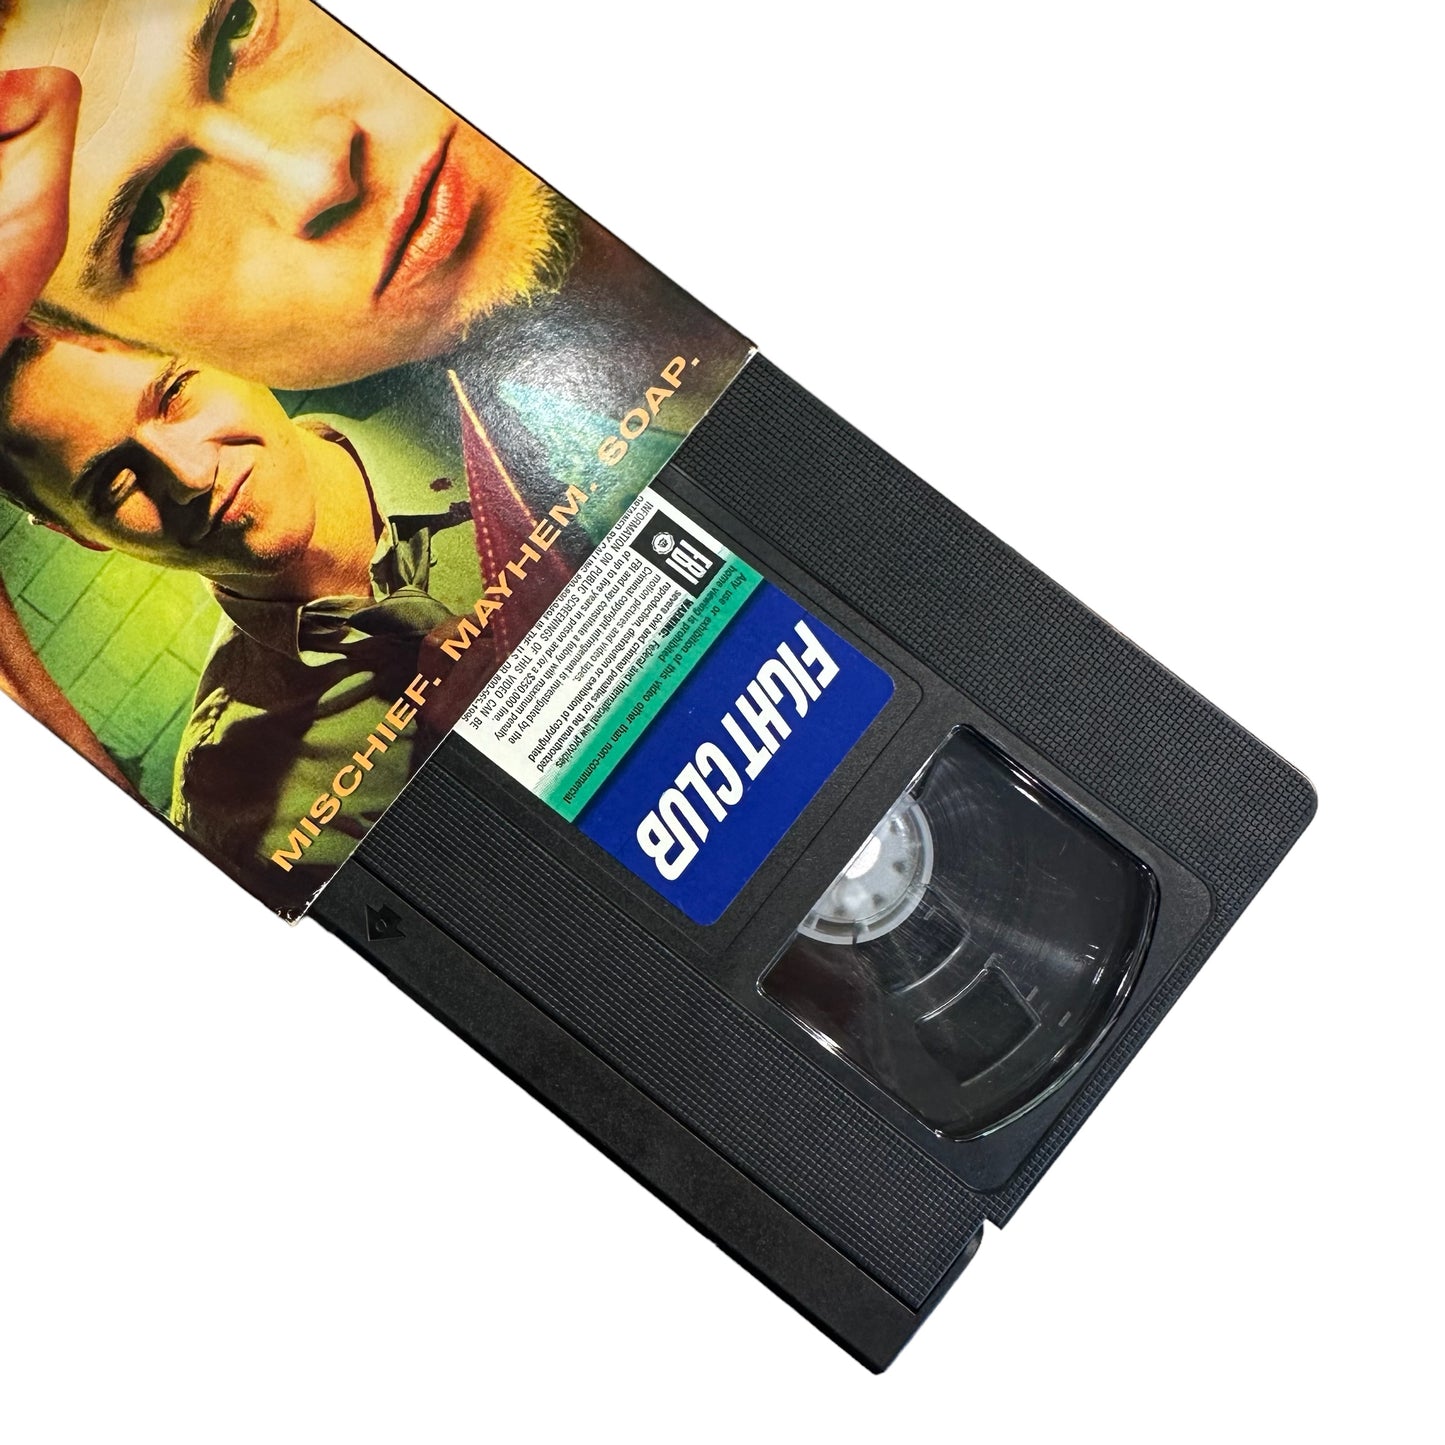 VHS ビデオテープ 輸入版 ファイト・クラブ Fight Club 海外版 USA アメリカ ヴィンテージビデオ 紙ジャケ